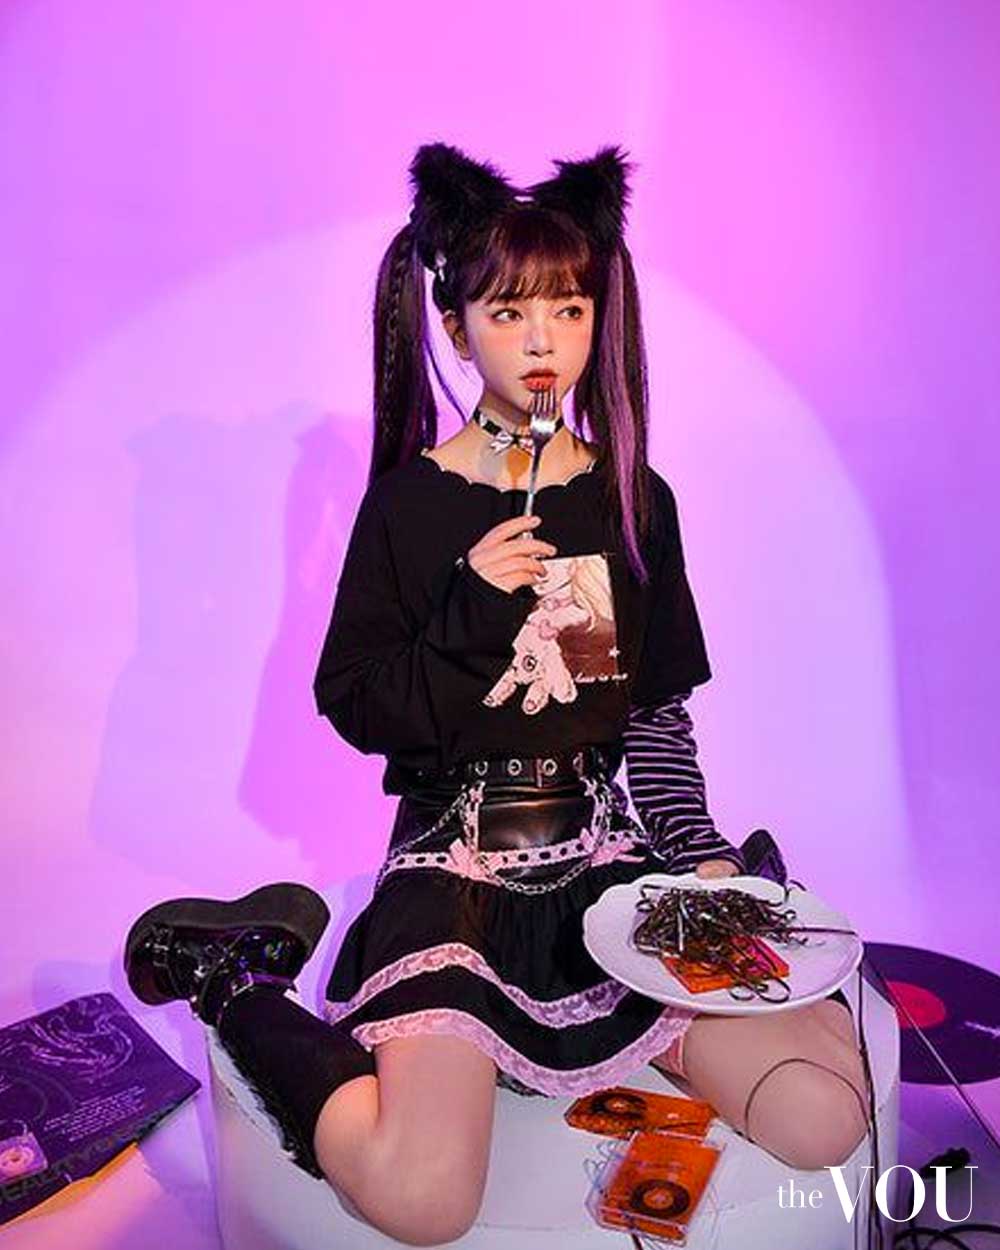 cat ears hairband, chocker, lace miniskirt, anime print t-shirt, platform boots